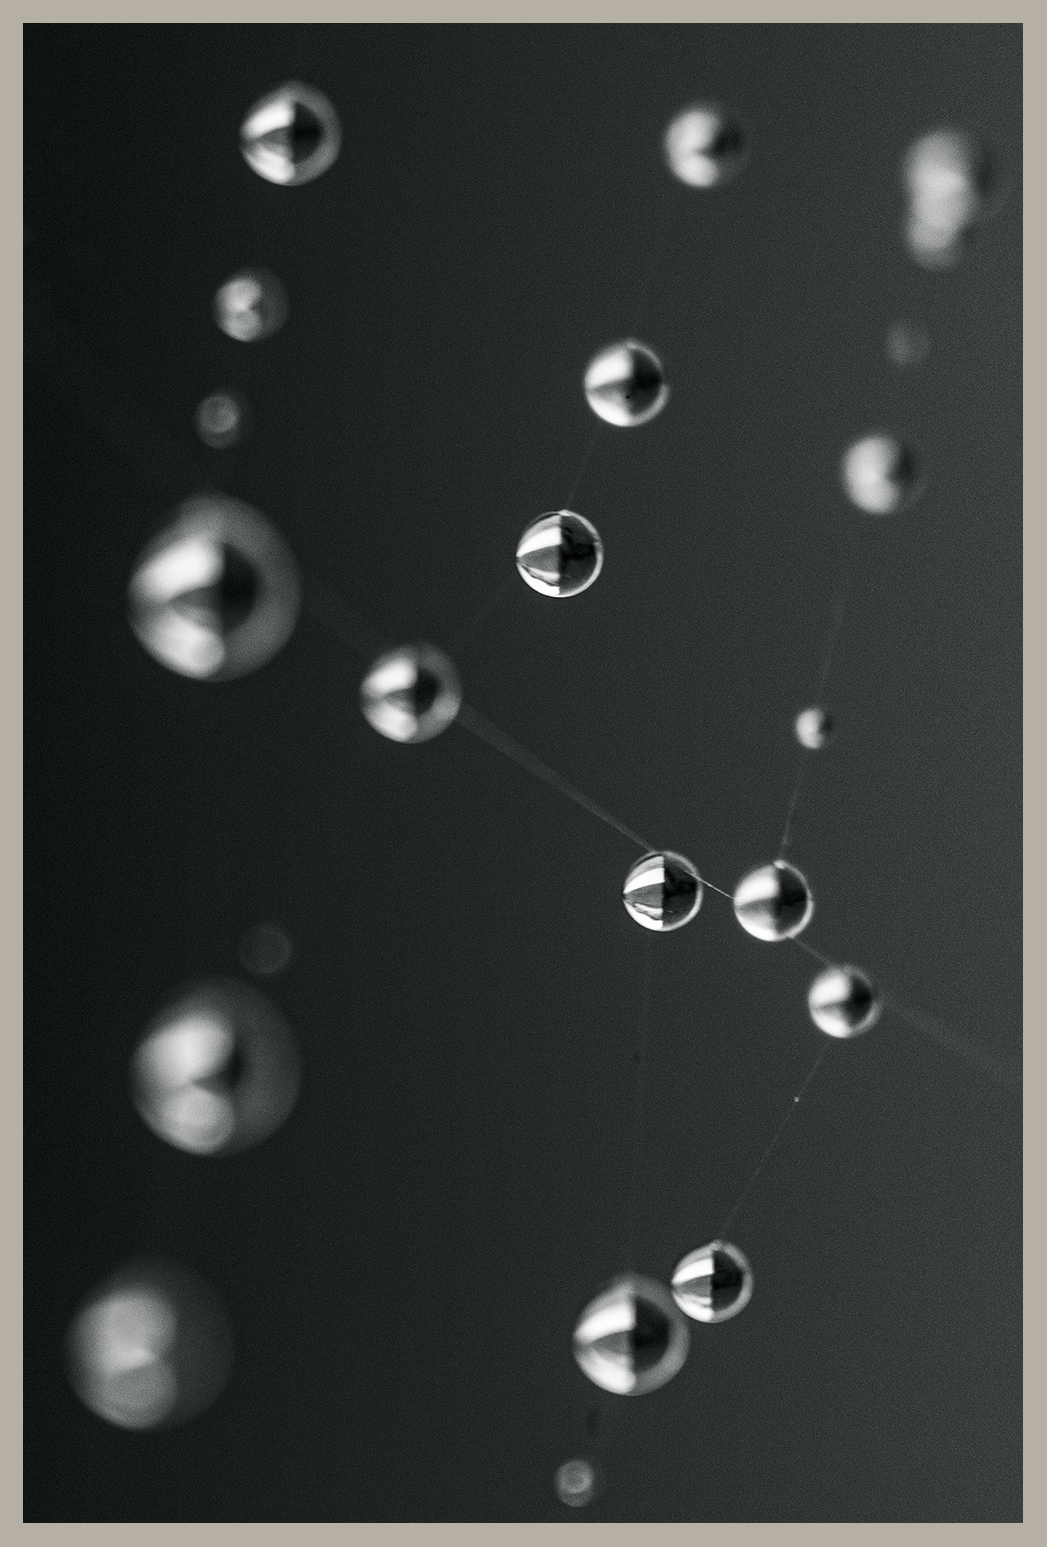 Rainwater on Spider's Web